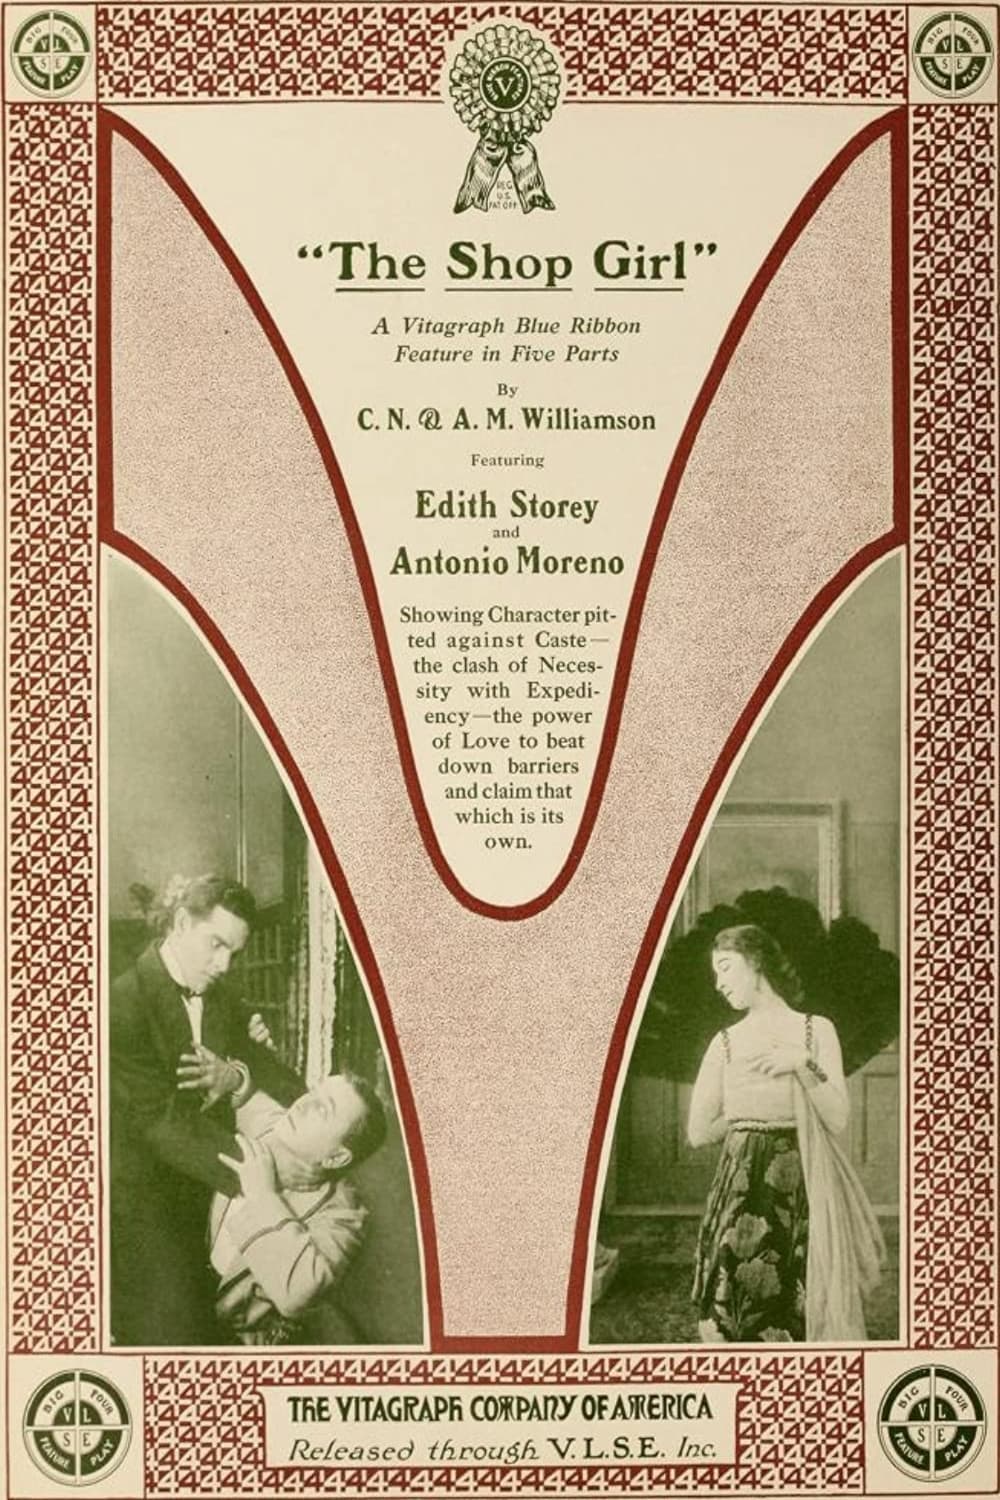 The Shop Girl